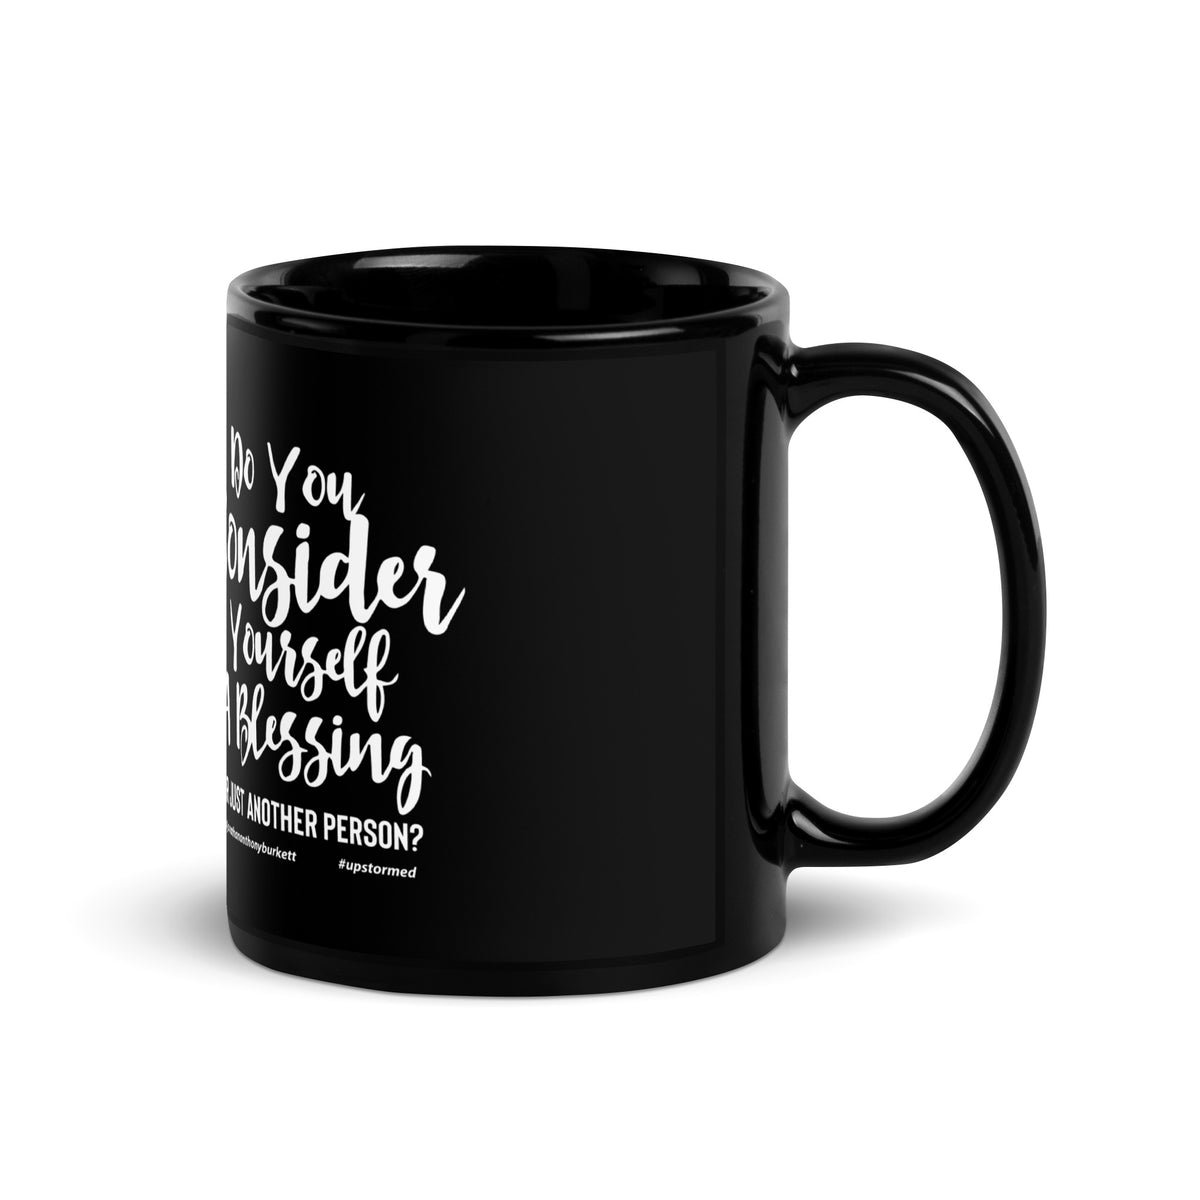 Do You Consider Yourself A Blessing Upstormed Mug